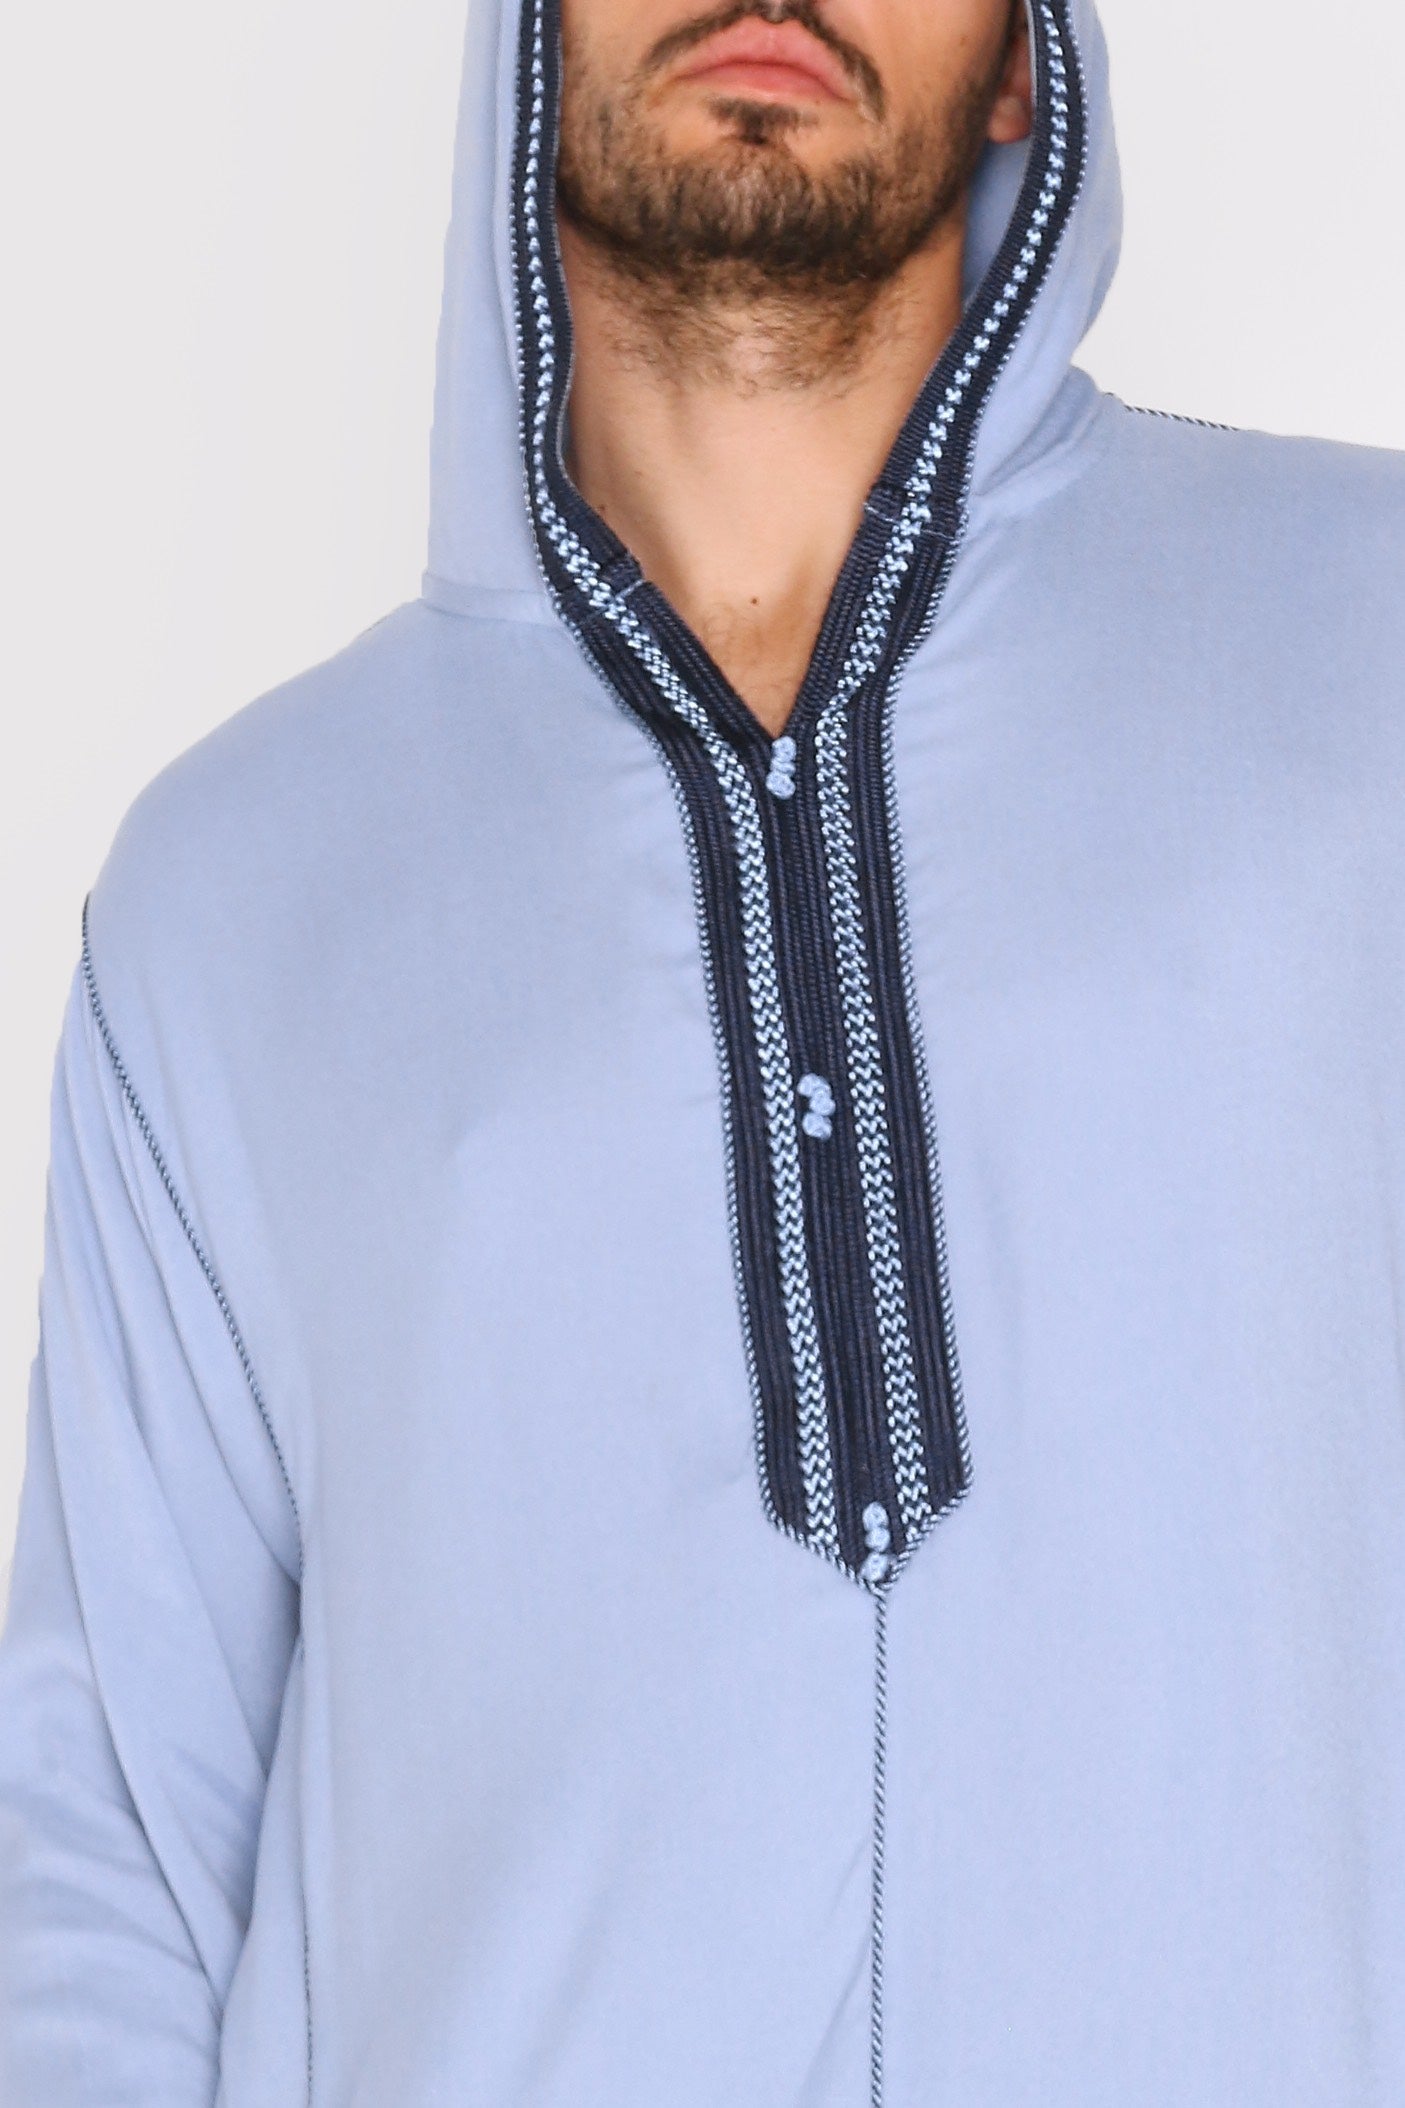 Djellaba Wael Men's Long Sleeve Full-Length Embroidered Hooded Robe Thobe in Blue